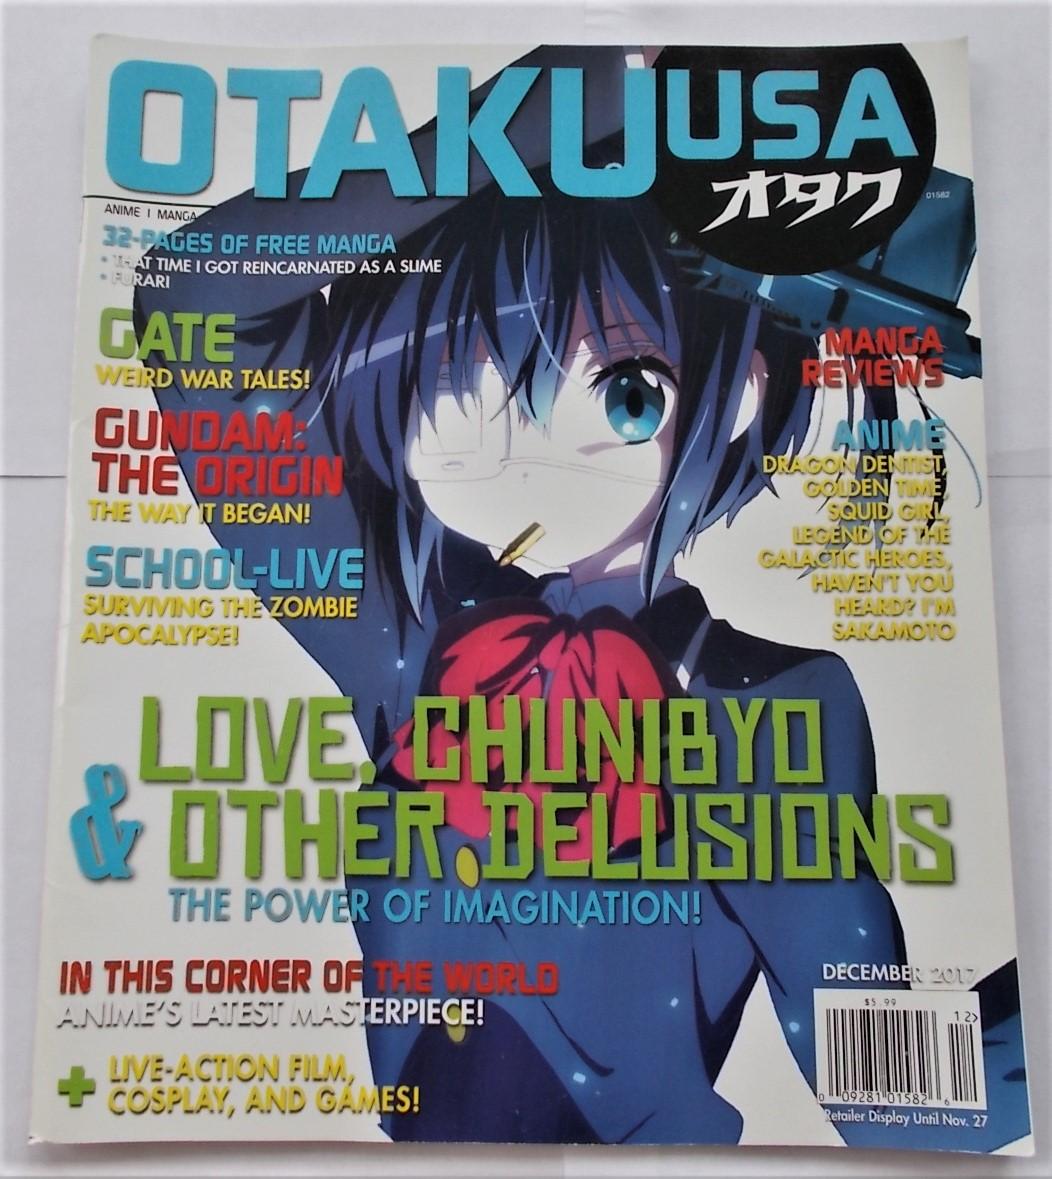 Otakuusa  Magazine Subscriptions  Amazoncom